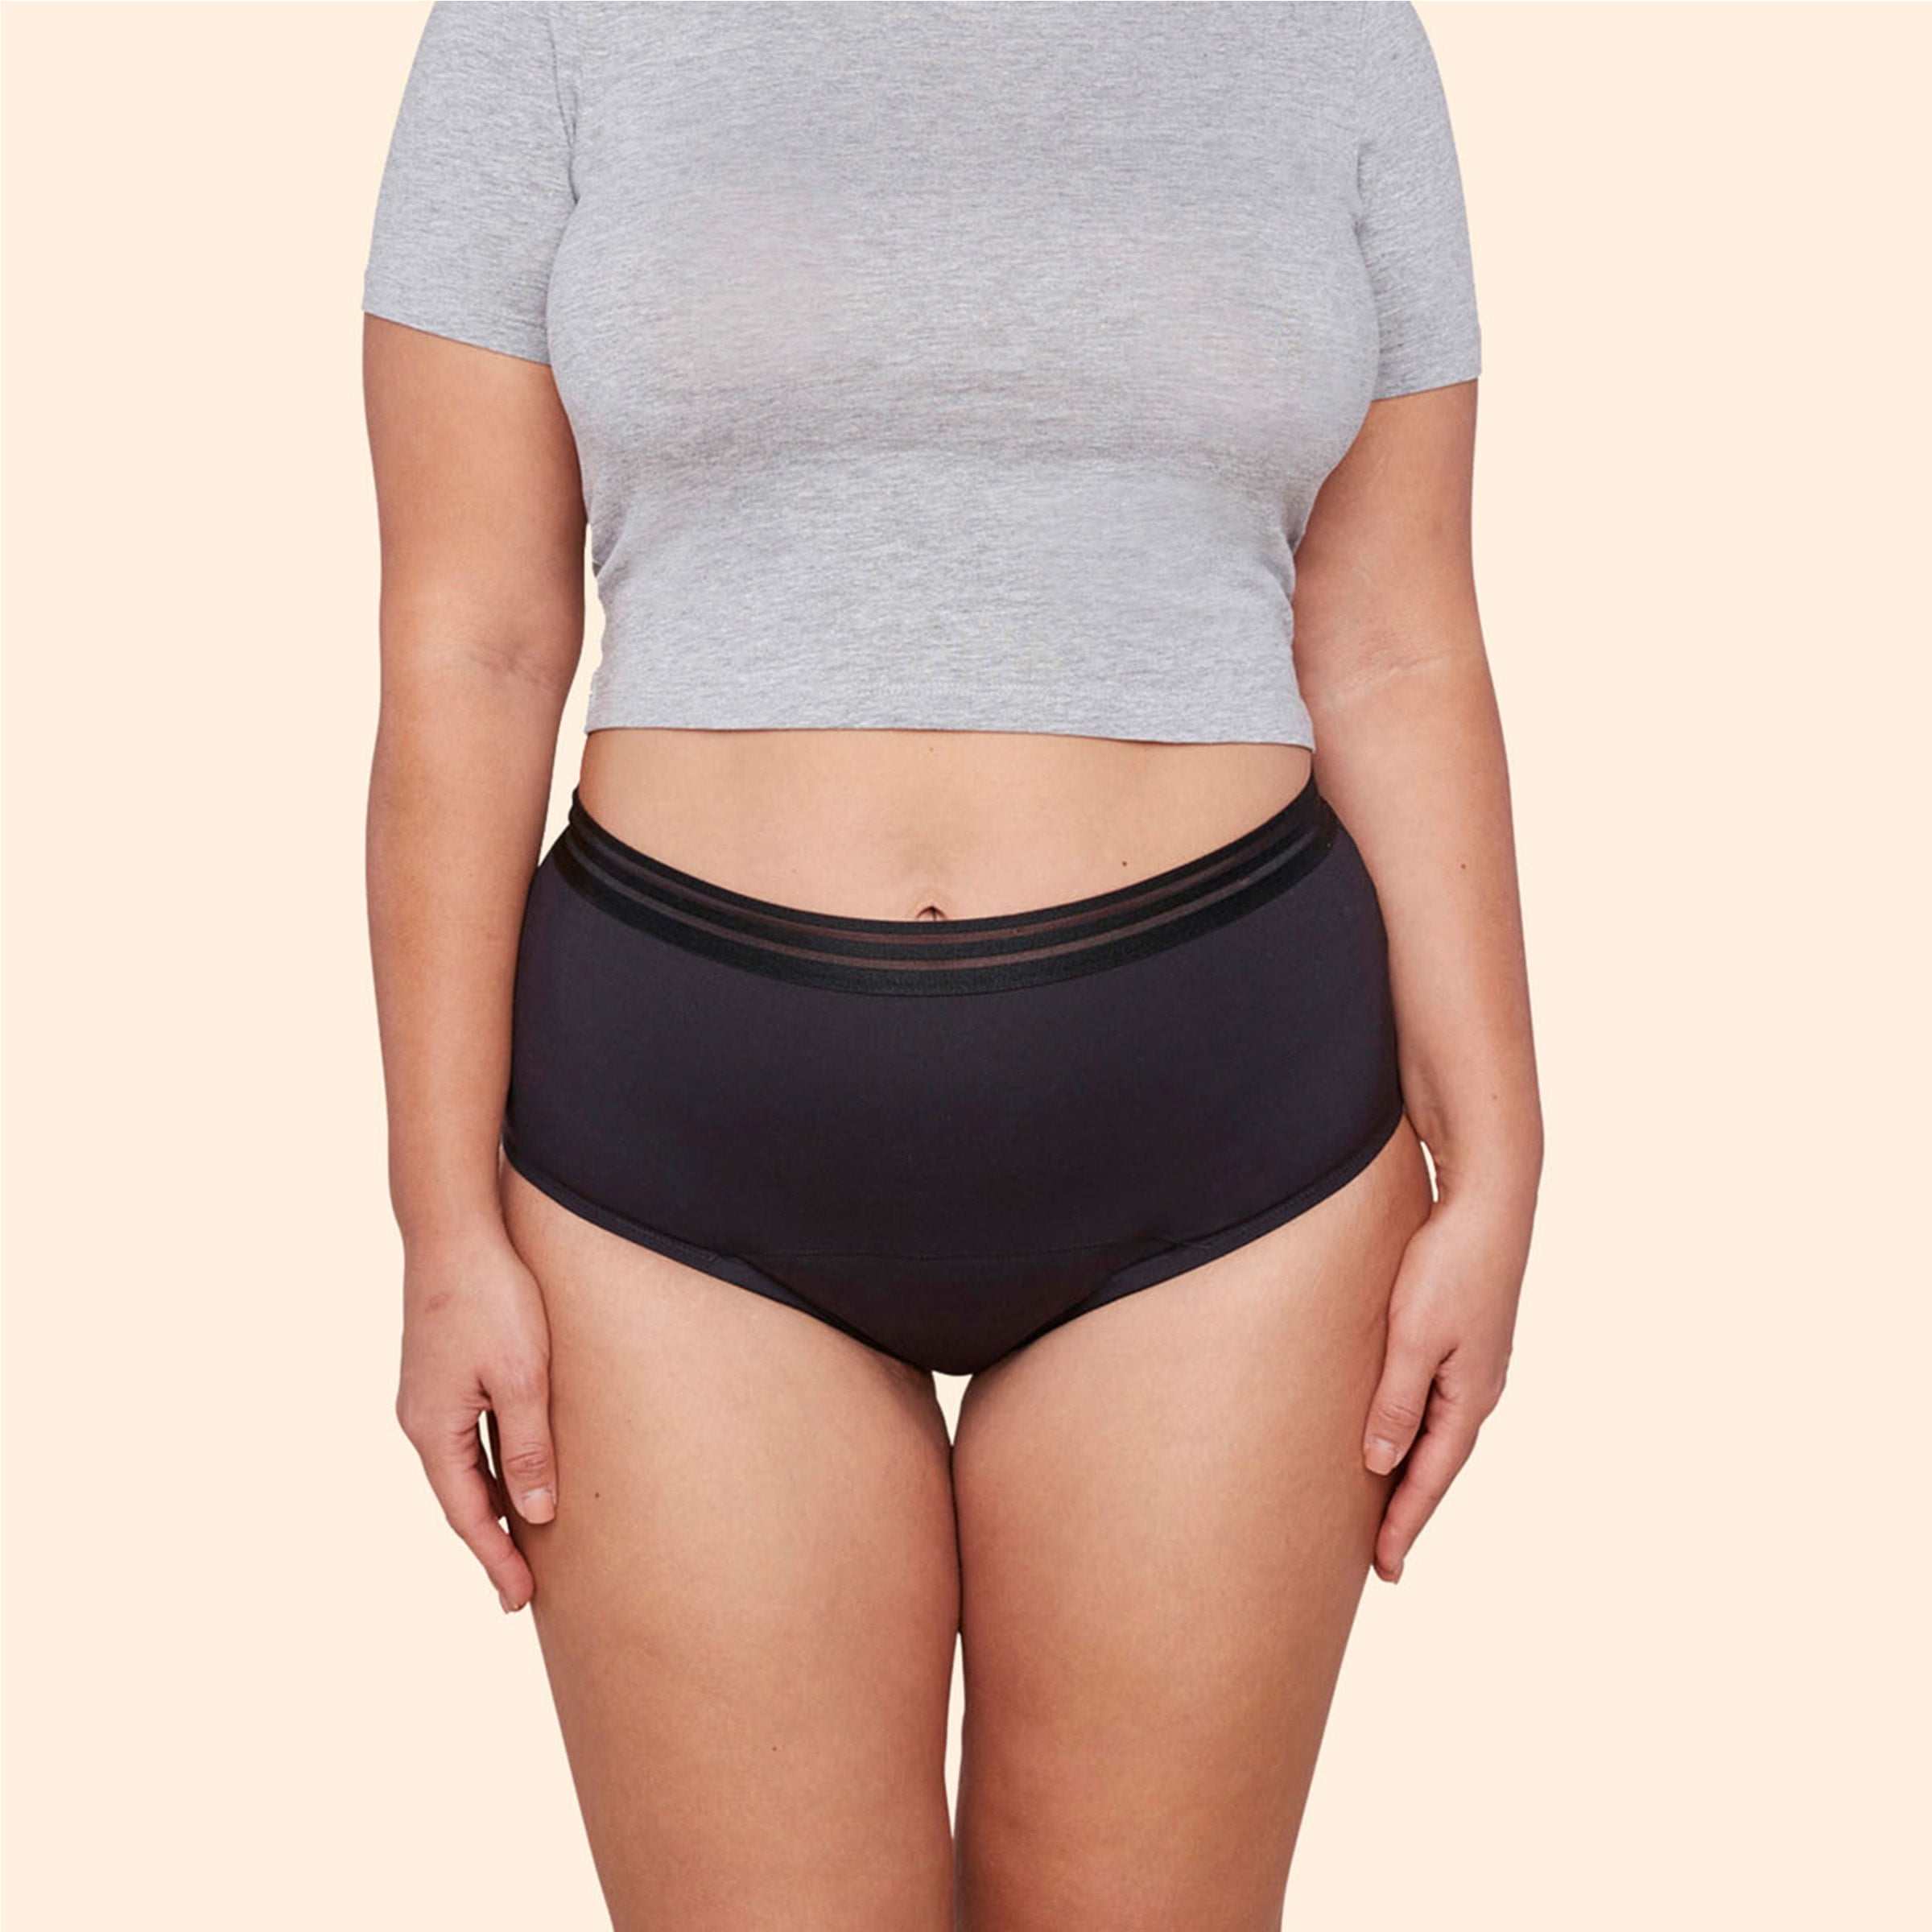 Thinx for All™ Women's Bikini Period Underwear, Super Absorbency, Black 